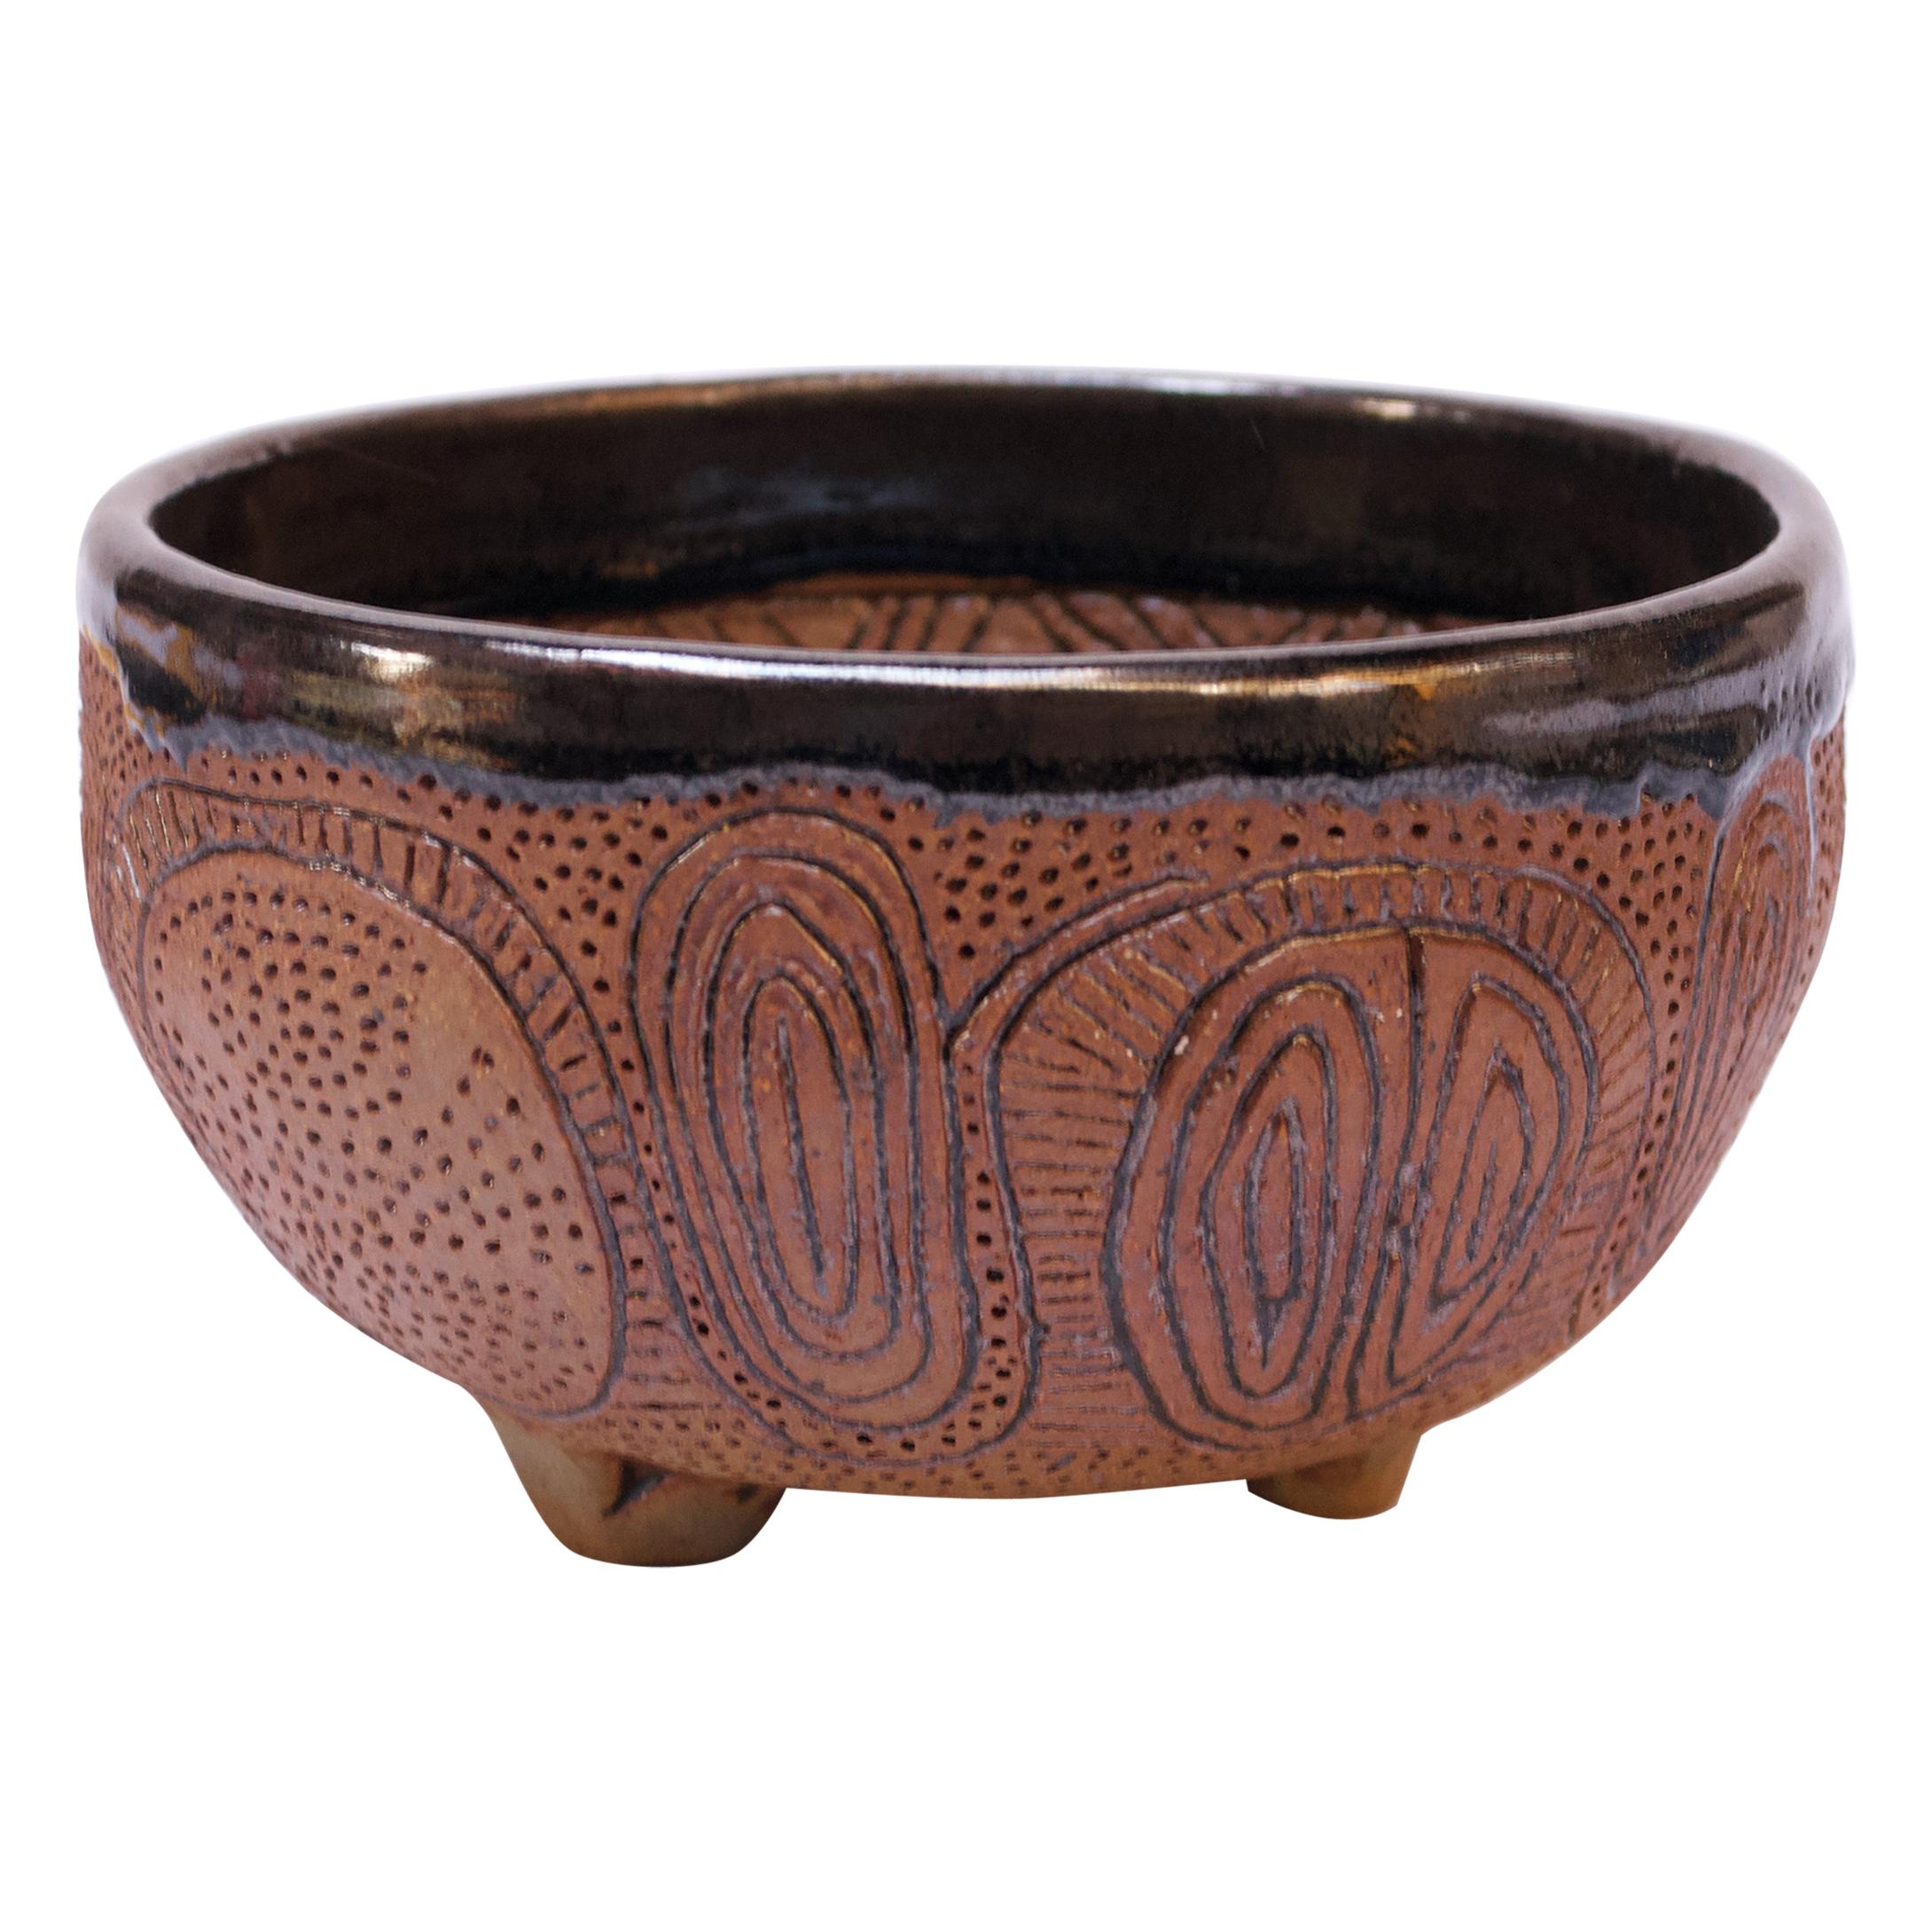 Polk Stoneware Footed Decorative Bowl / Vide Poche with Sgraffito Decoration